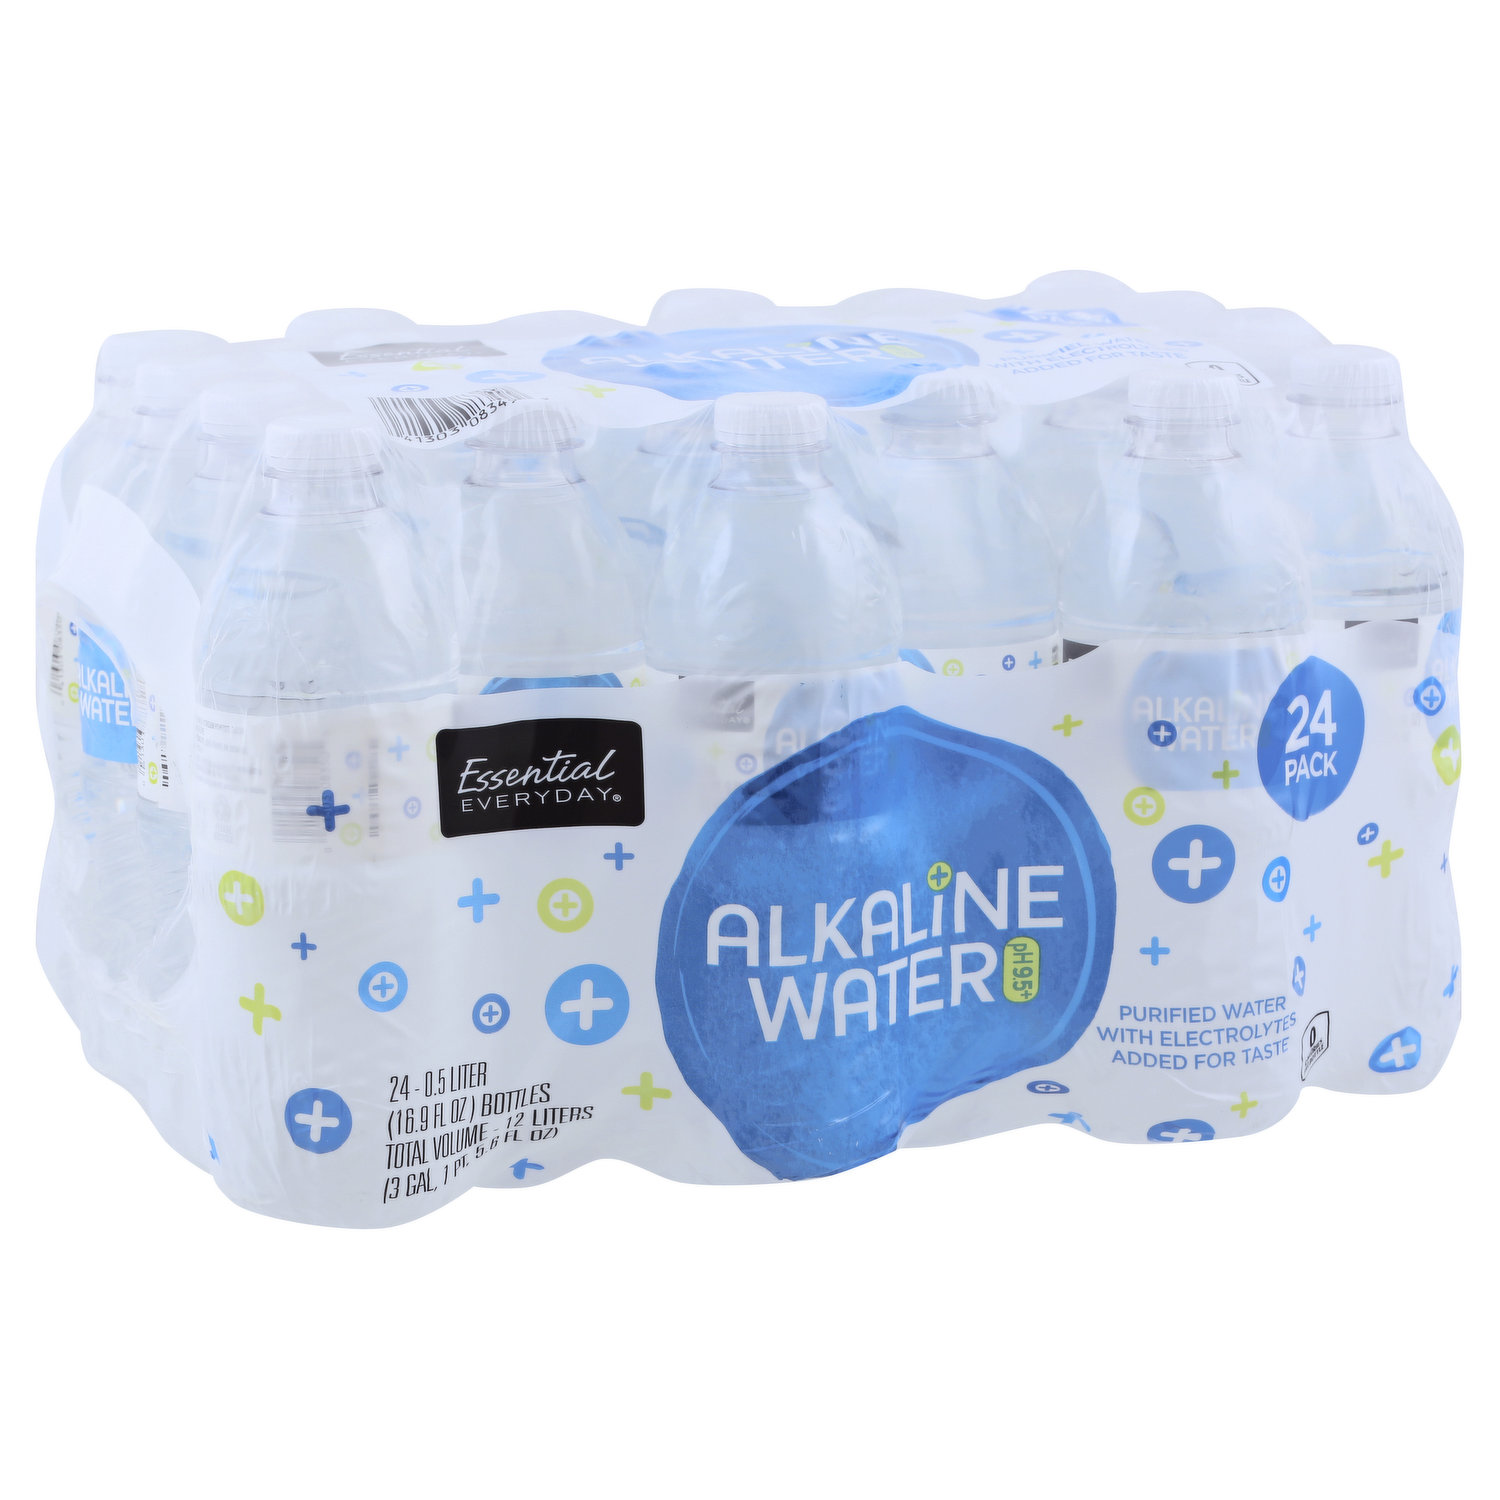 JUST Water, Bottled Alkaline 100% Spring Water, 24 Pack (16.9 fl